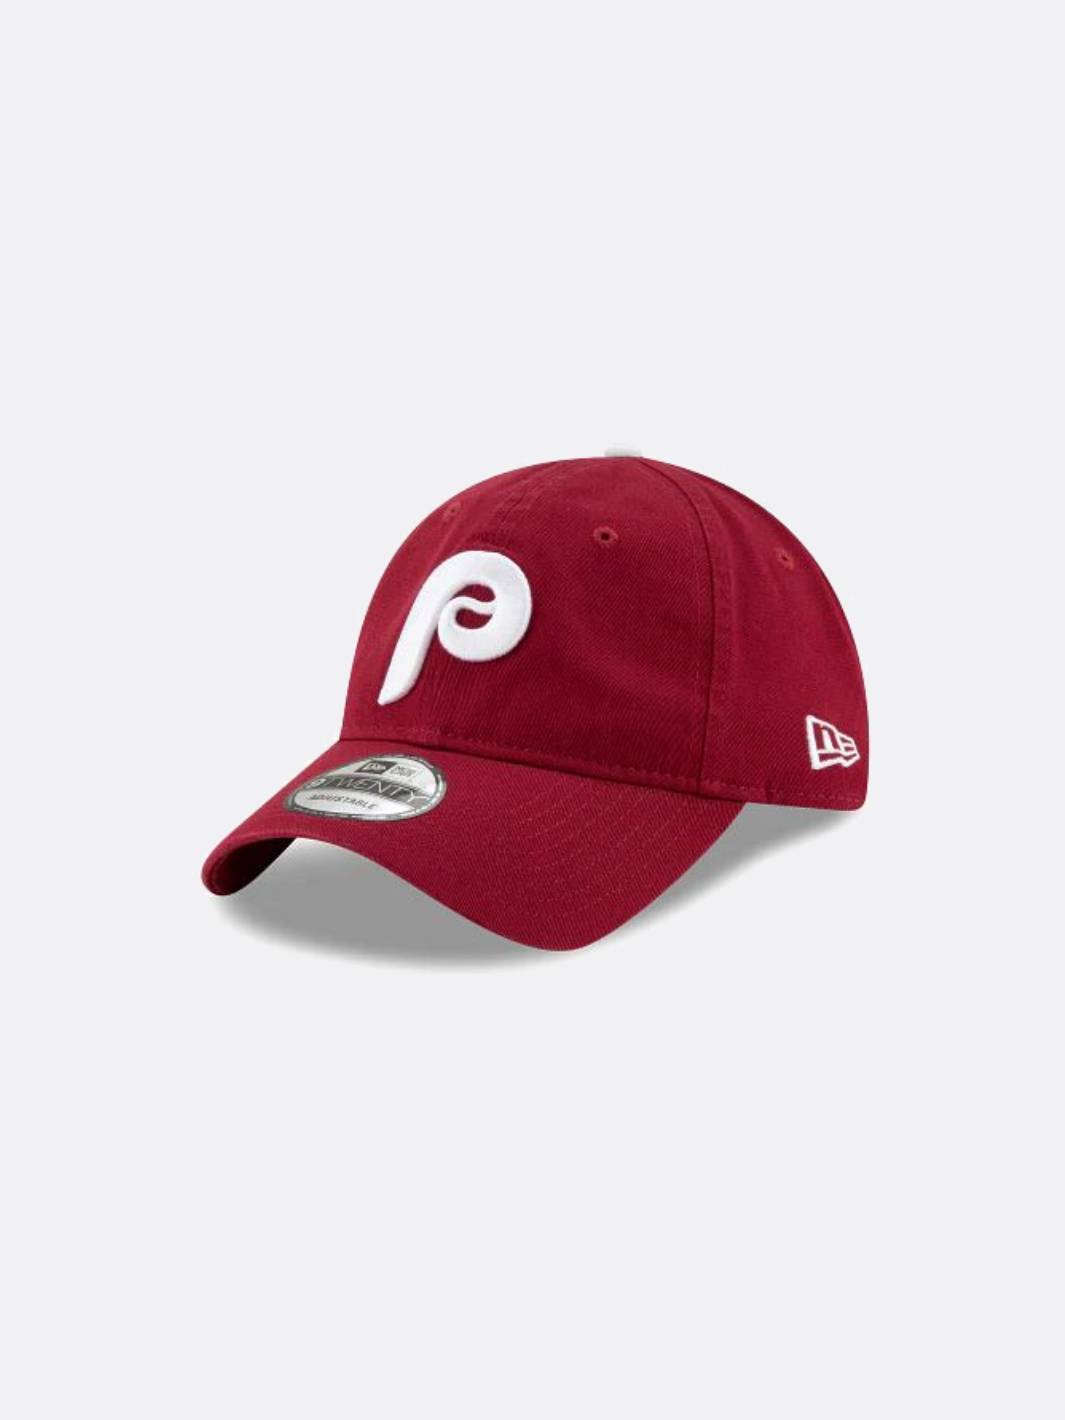 New Era, Accessories, Throwback Phillies Hat